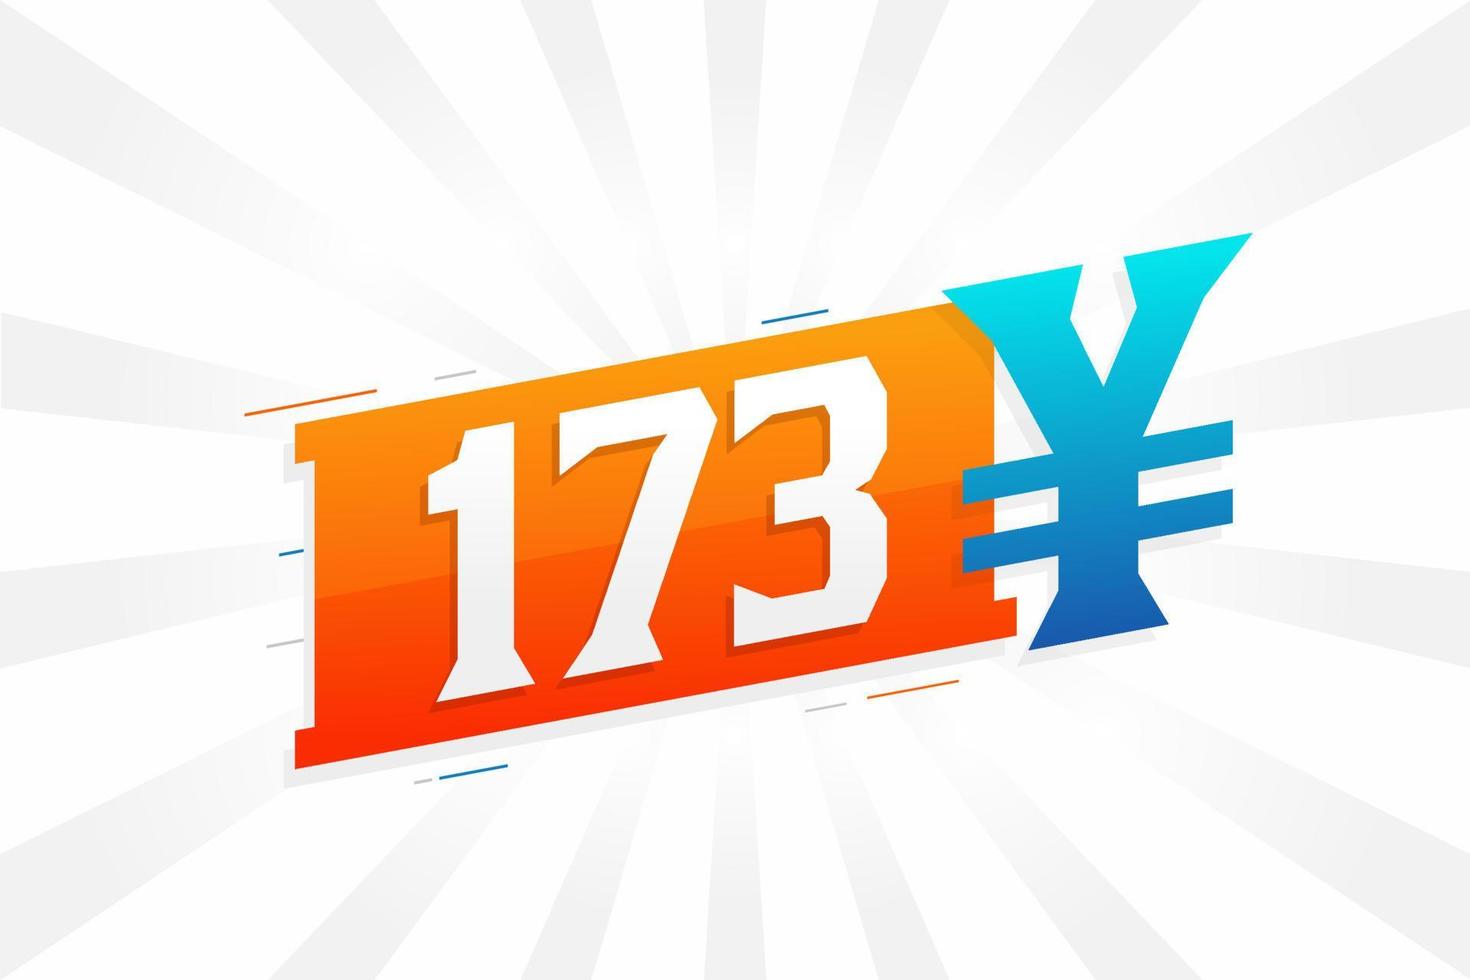 173 yuan Cinese moneta vettore testo simbolo. 173 yen giapponese moneta i soldi azione vettore